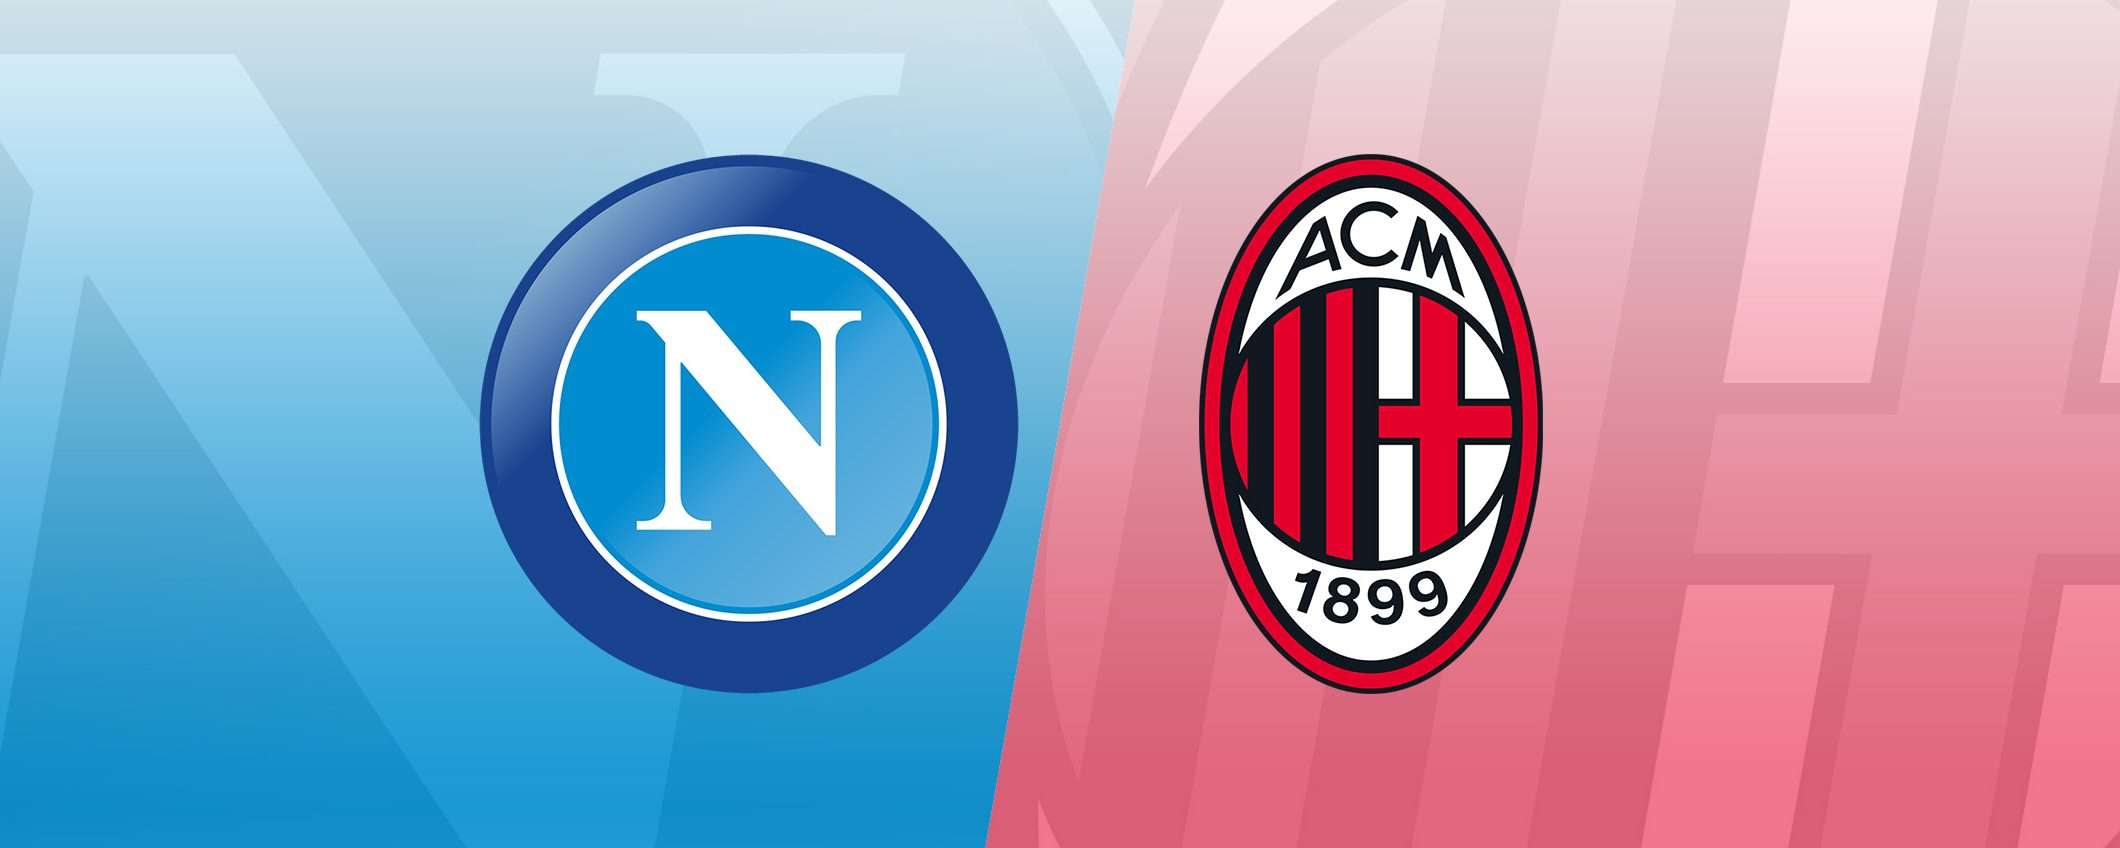 Come vedere Napoli-Milan in streaming (Serie A)